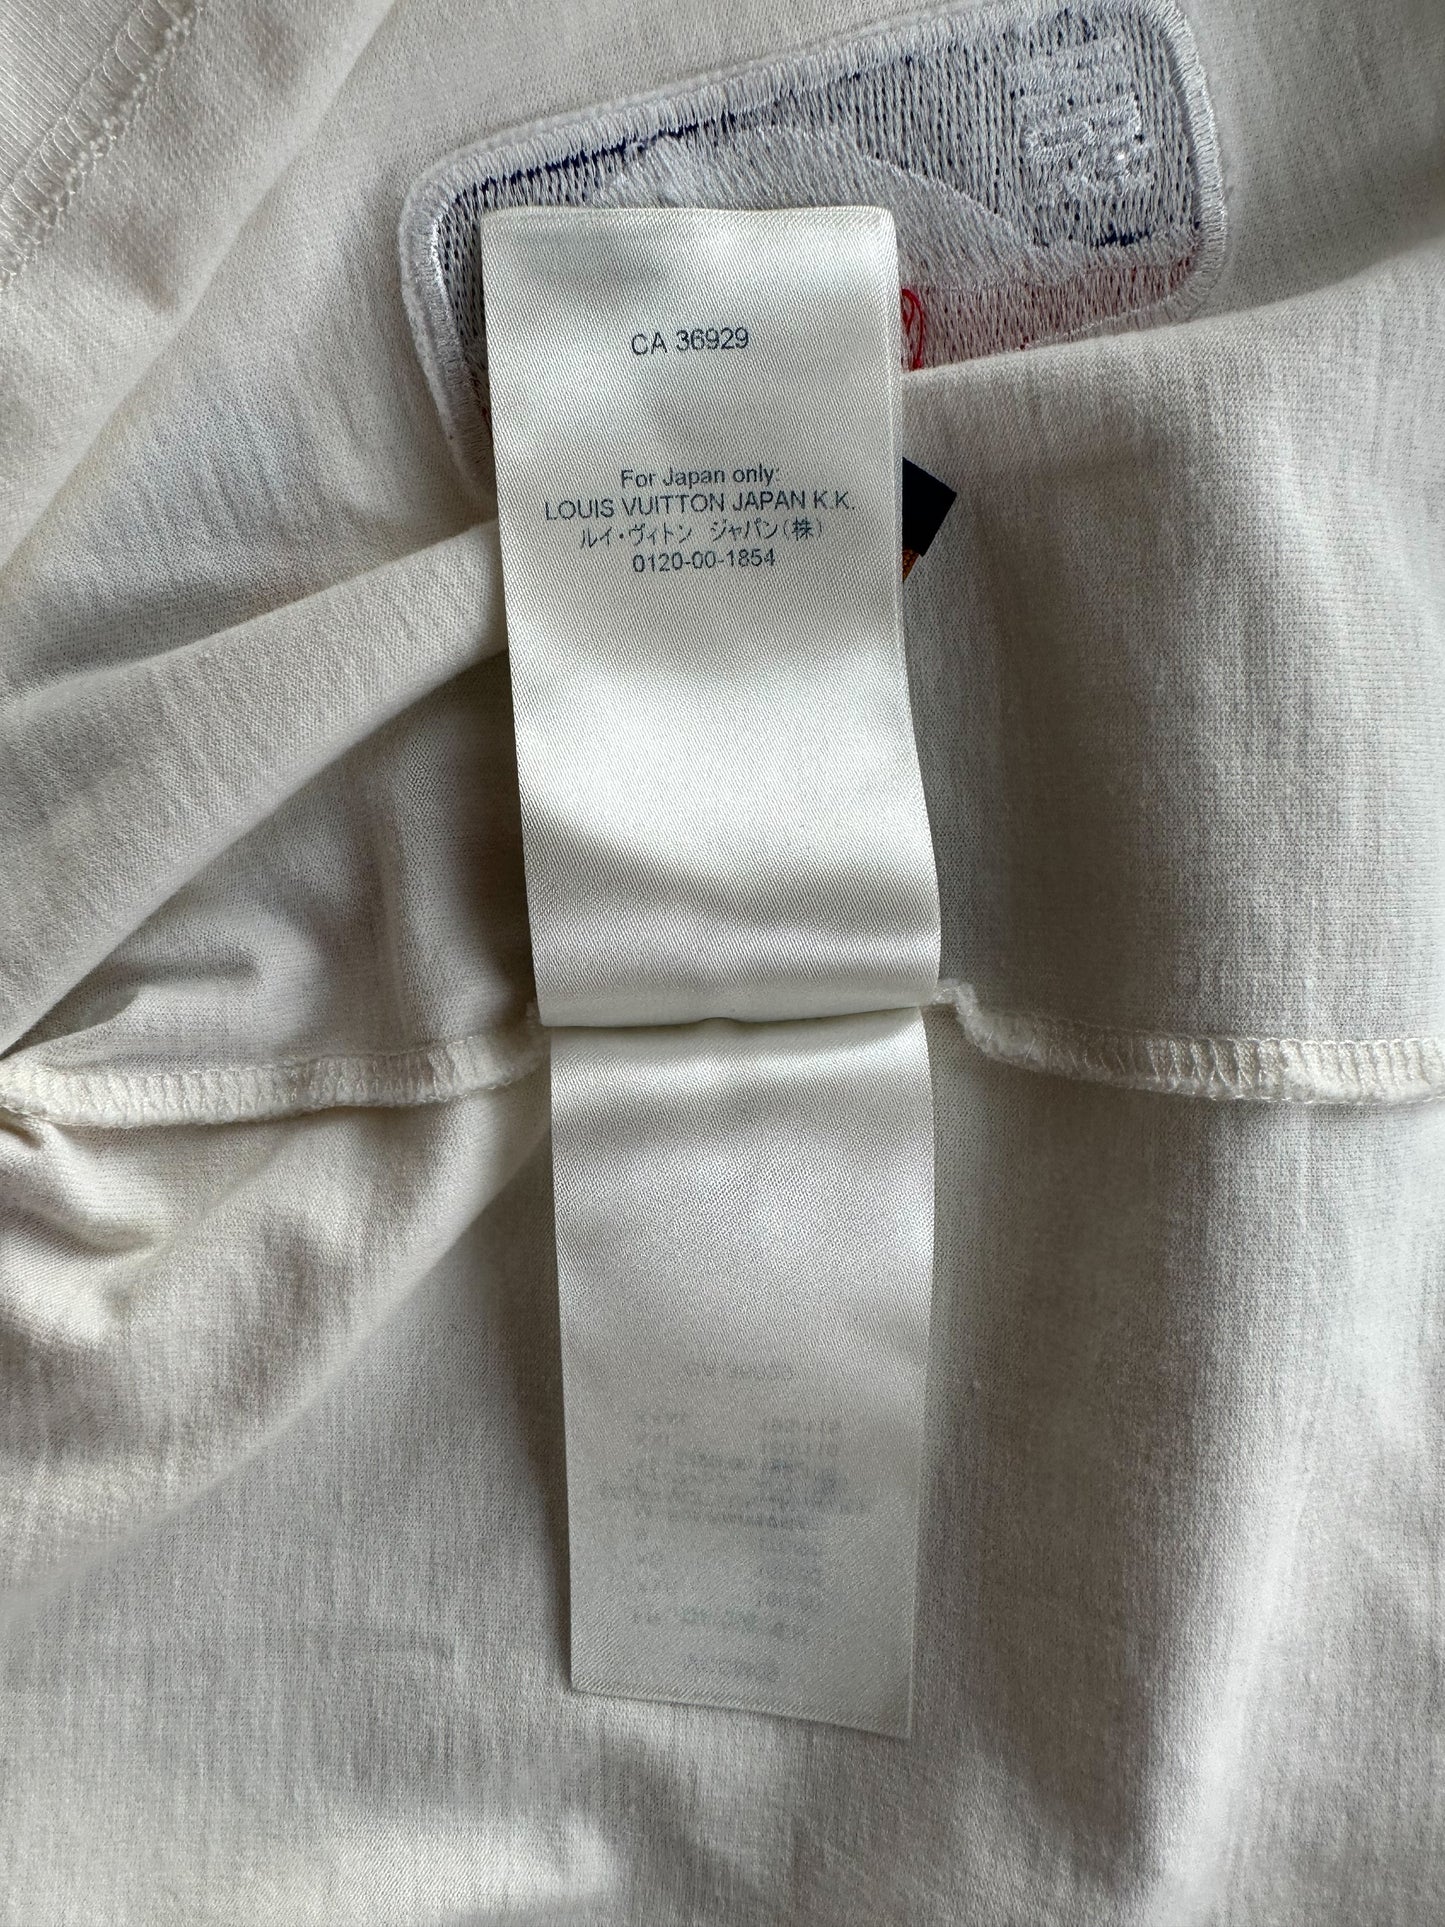 Louis Vuitton t shirt NBA white Size M from Japan